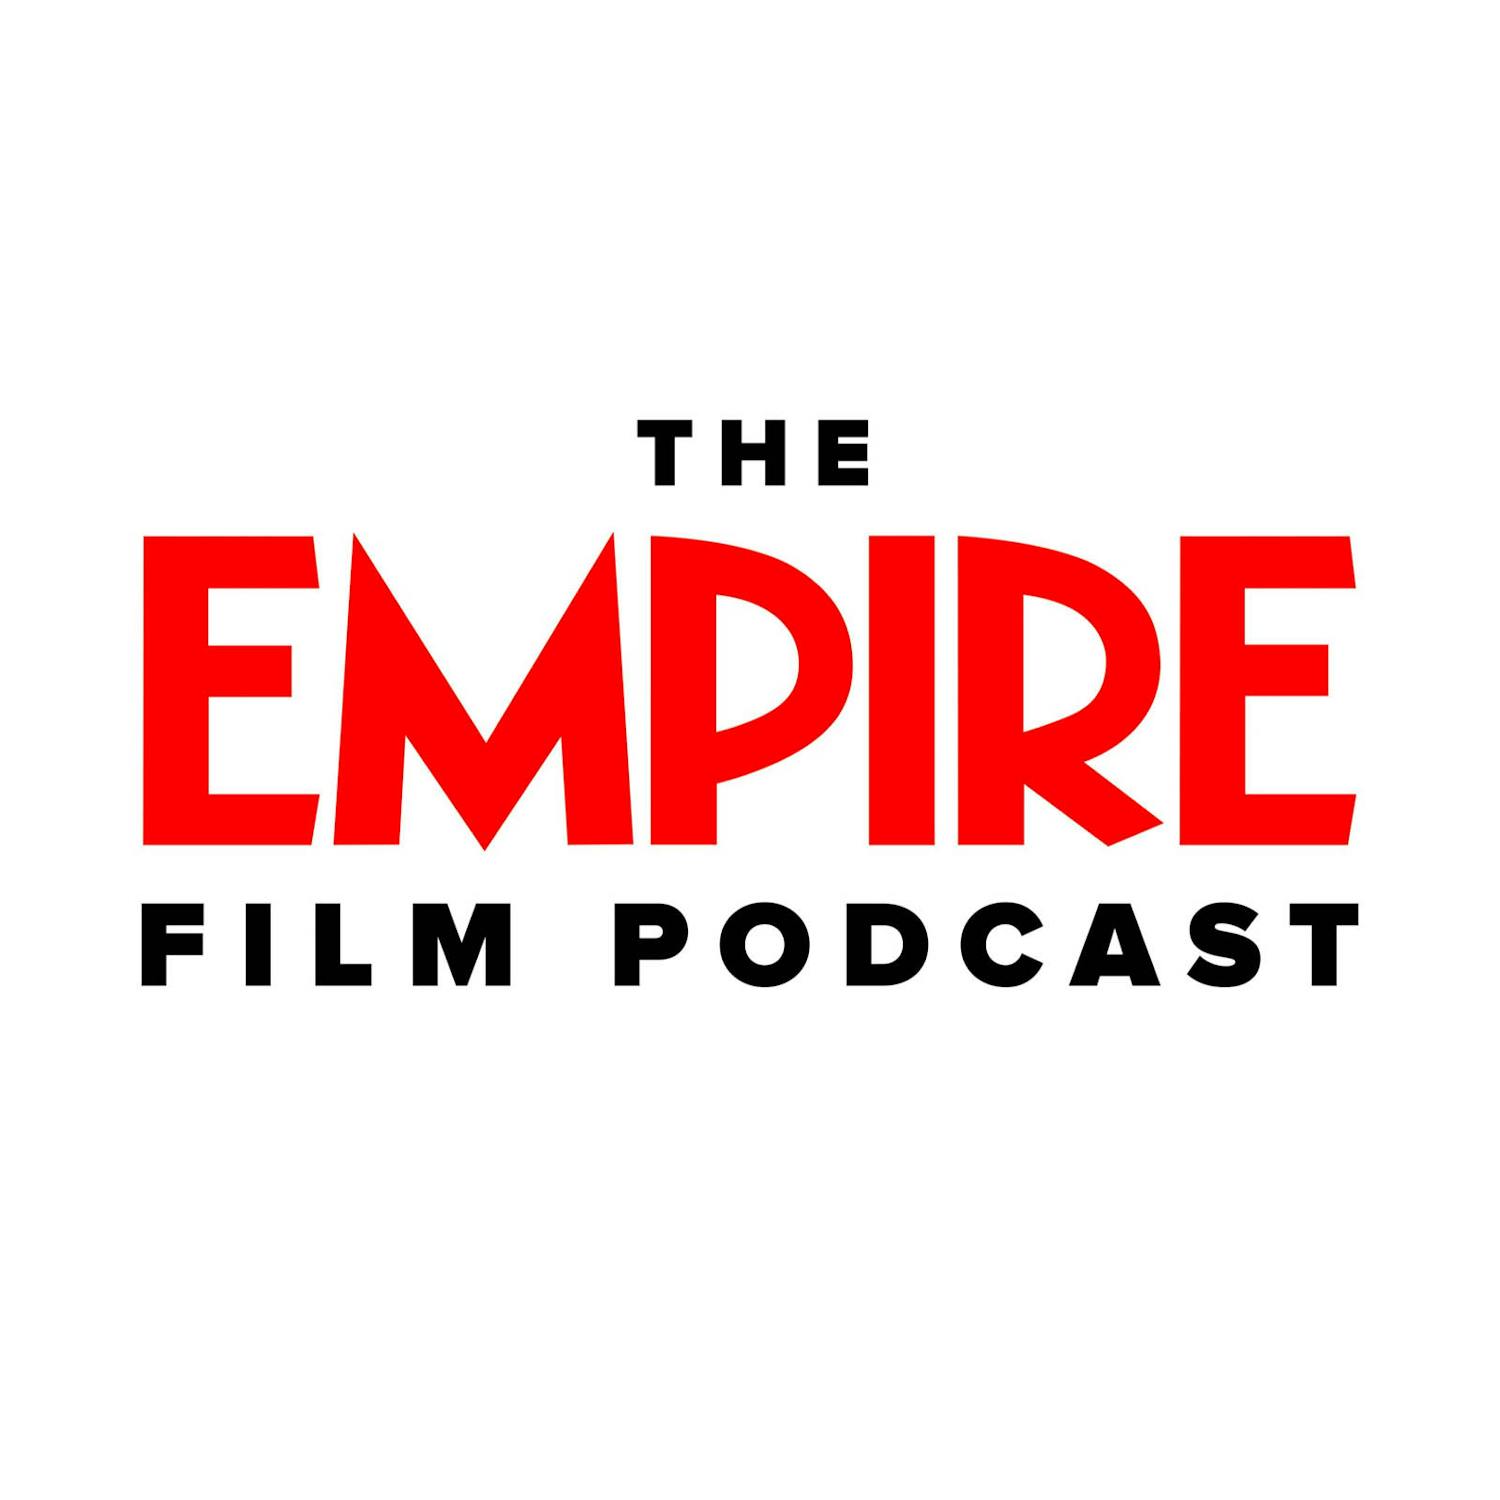 The Empire Film Podcast podcast show image